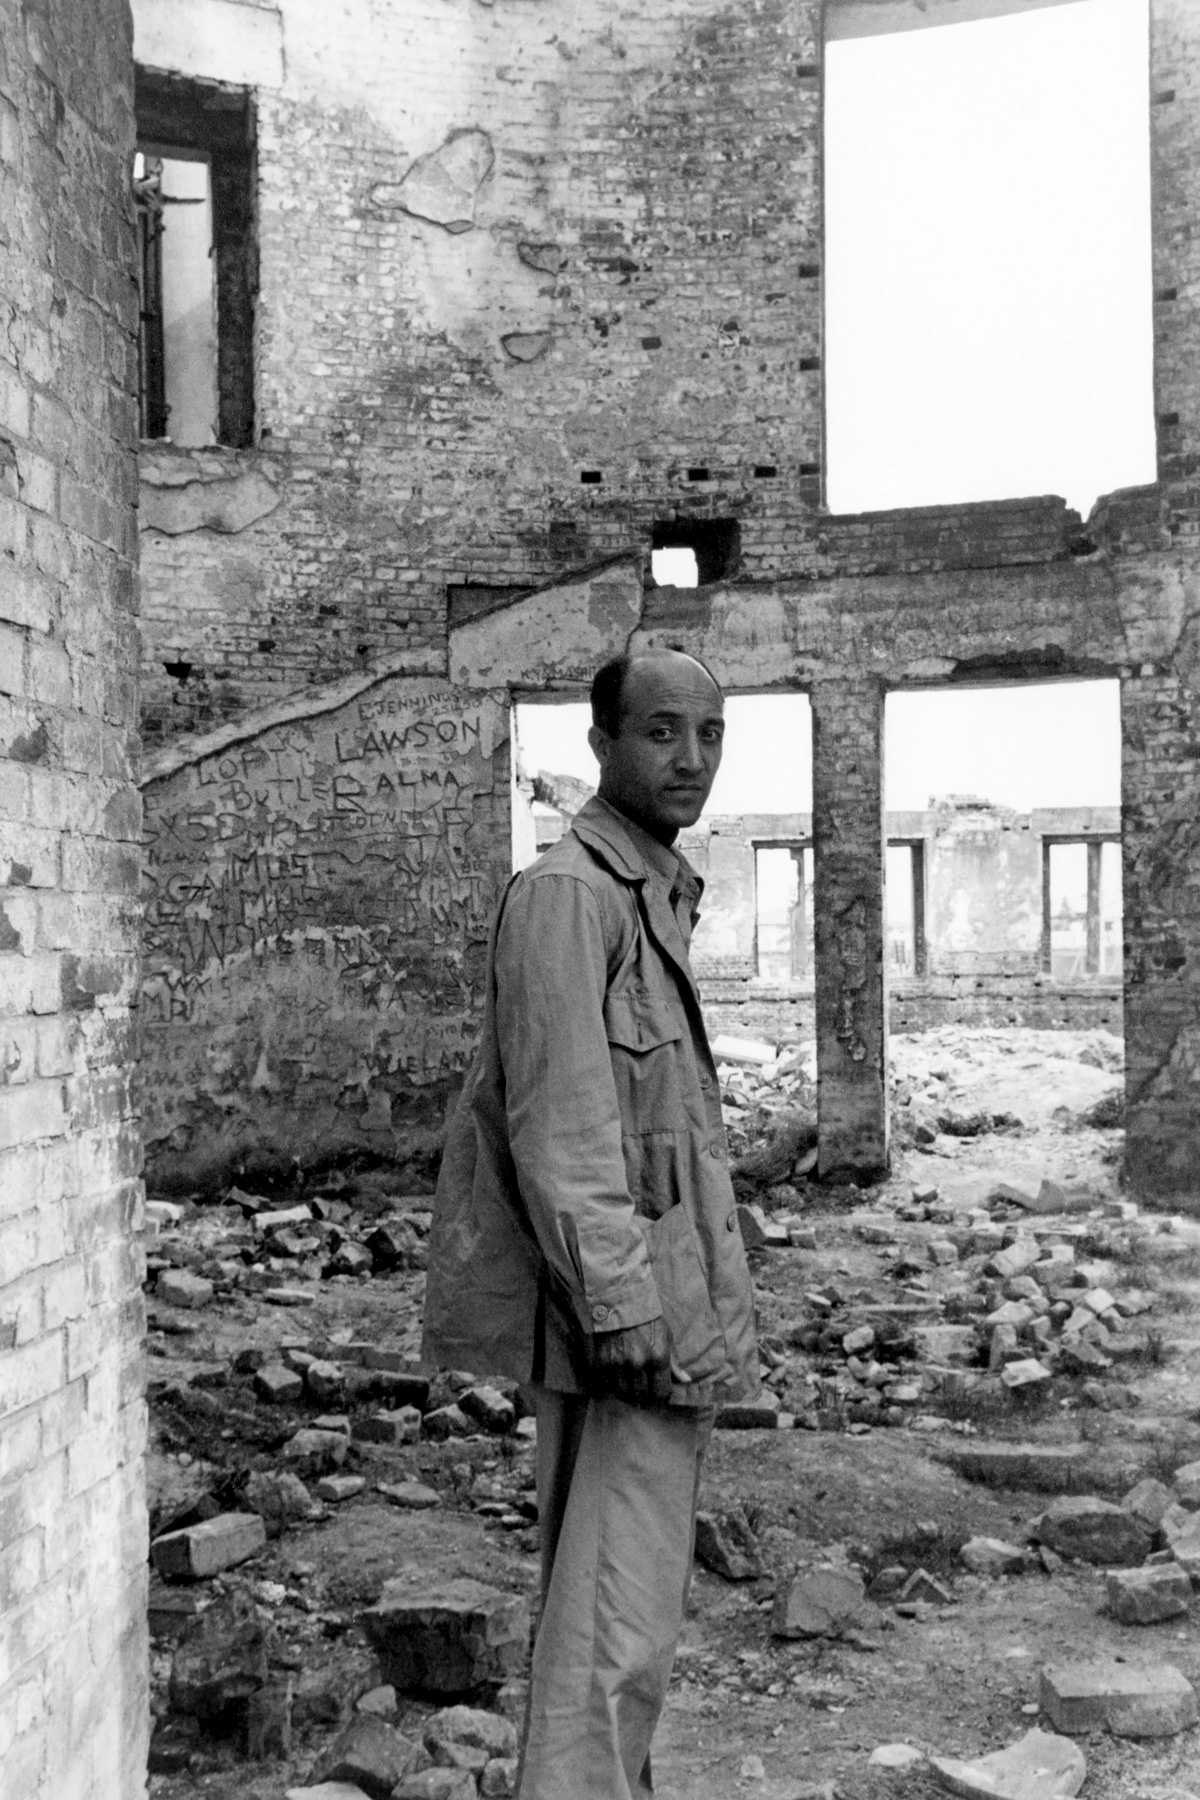 Isamu Noguchi in the ruins of Hiroshima in 1951